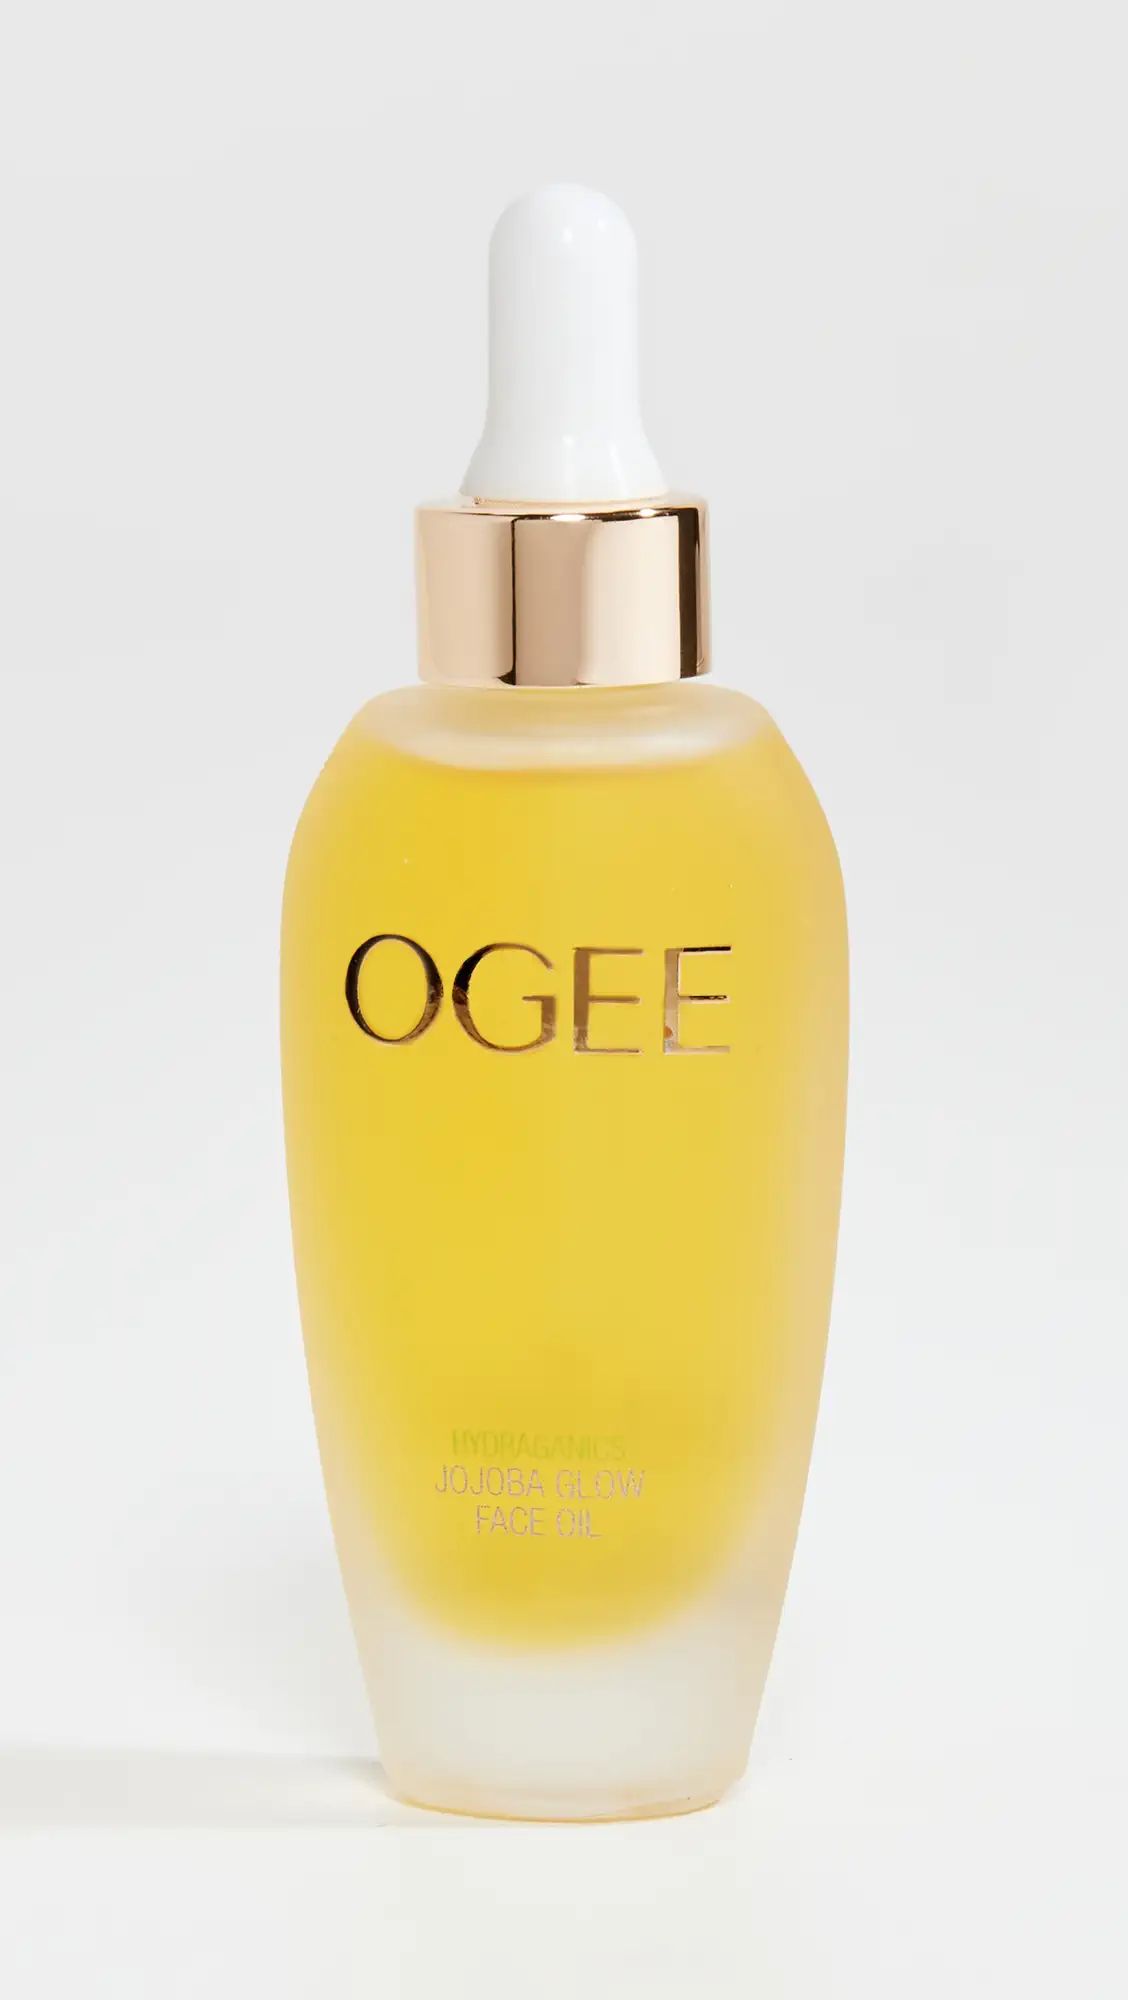 Ogee Jojoba Glow Face Oil | Shopbop | Shopbop